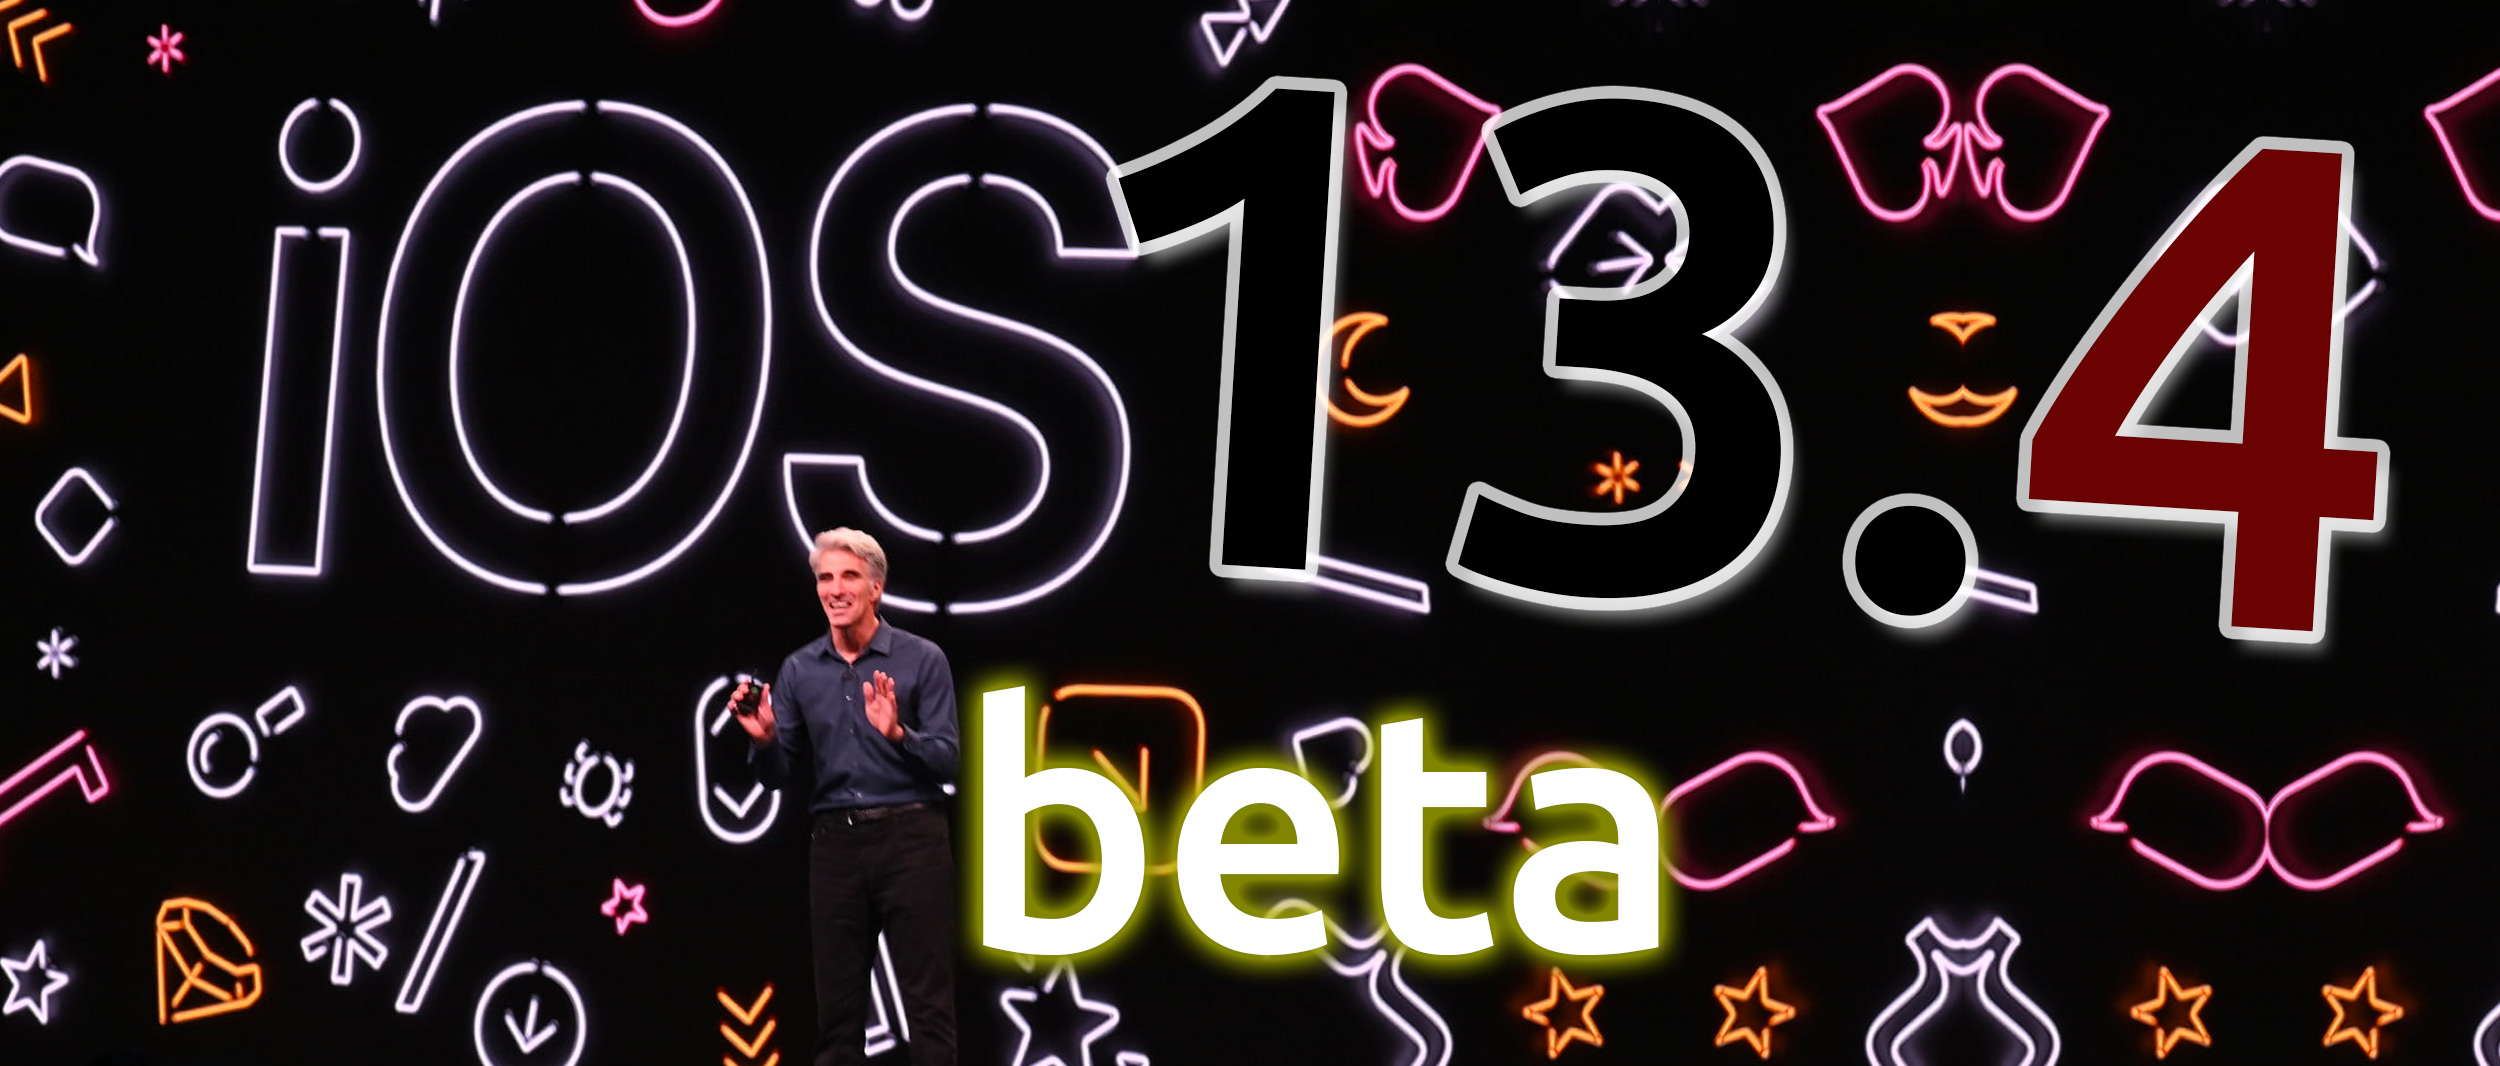 iOS 13.4 beta